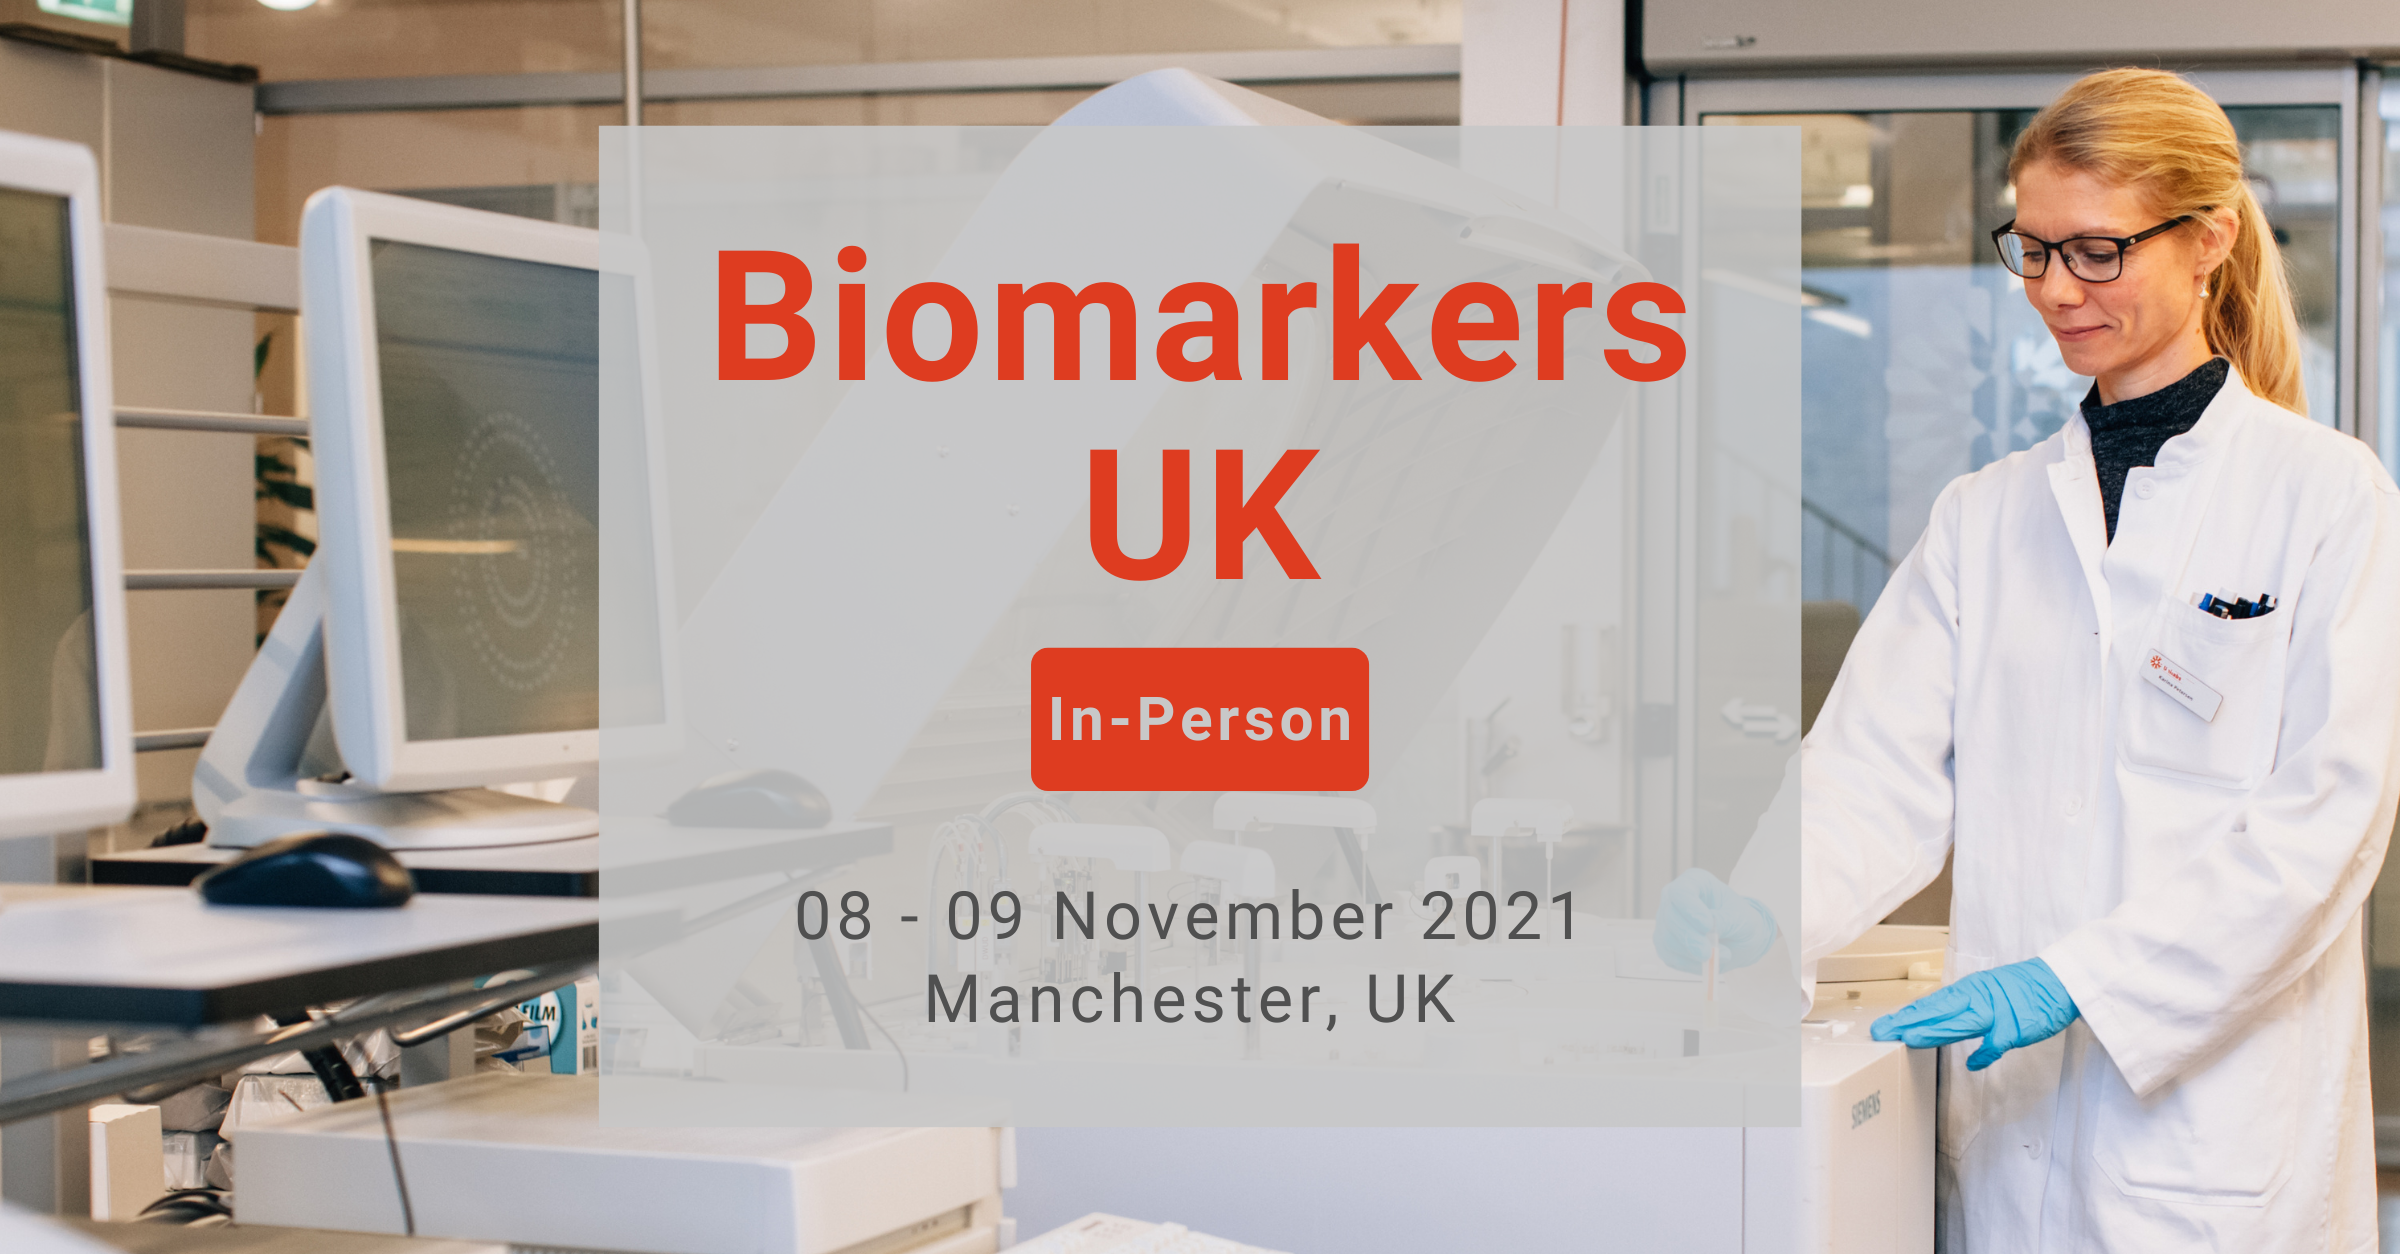 Biomarkers UK, 08-09 November 2021